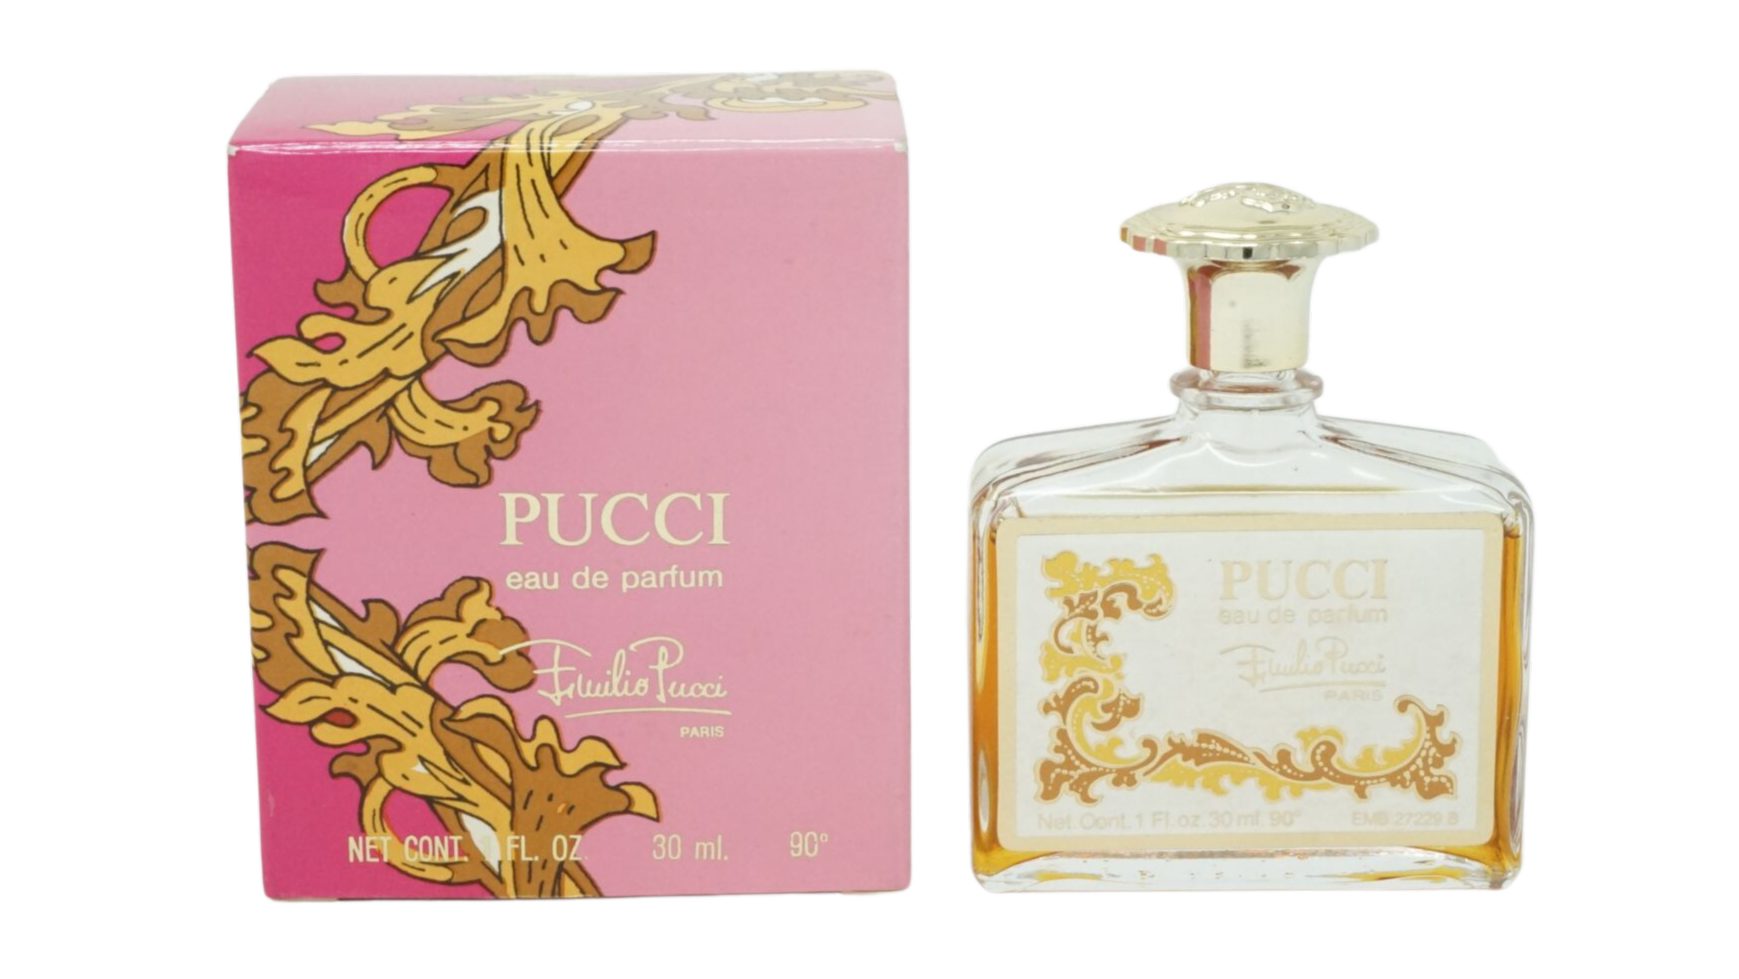 EMILIO PUCCI Eau de Parfum Emilio Pucci Pucci Eau de Parfum 30ml | Eau de Parfum